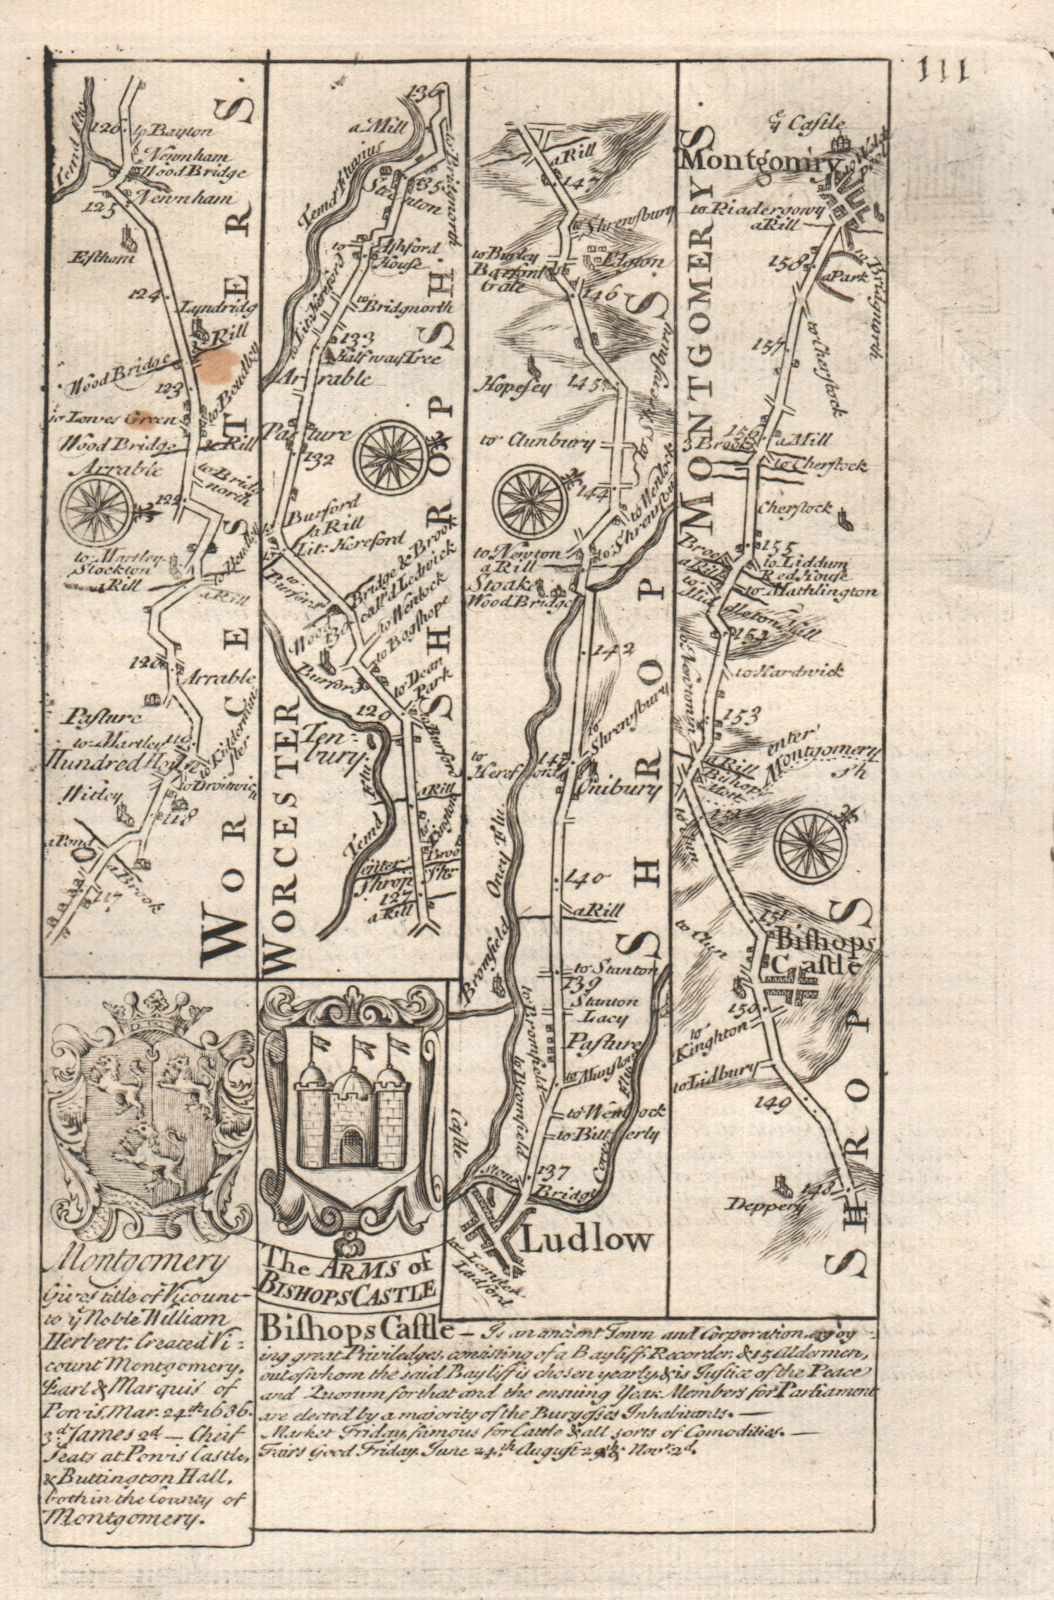 Tenbury Wells-Ludlow-Bishop's Castle-Montgomery road map by OWEN & BOWEN 1753